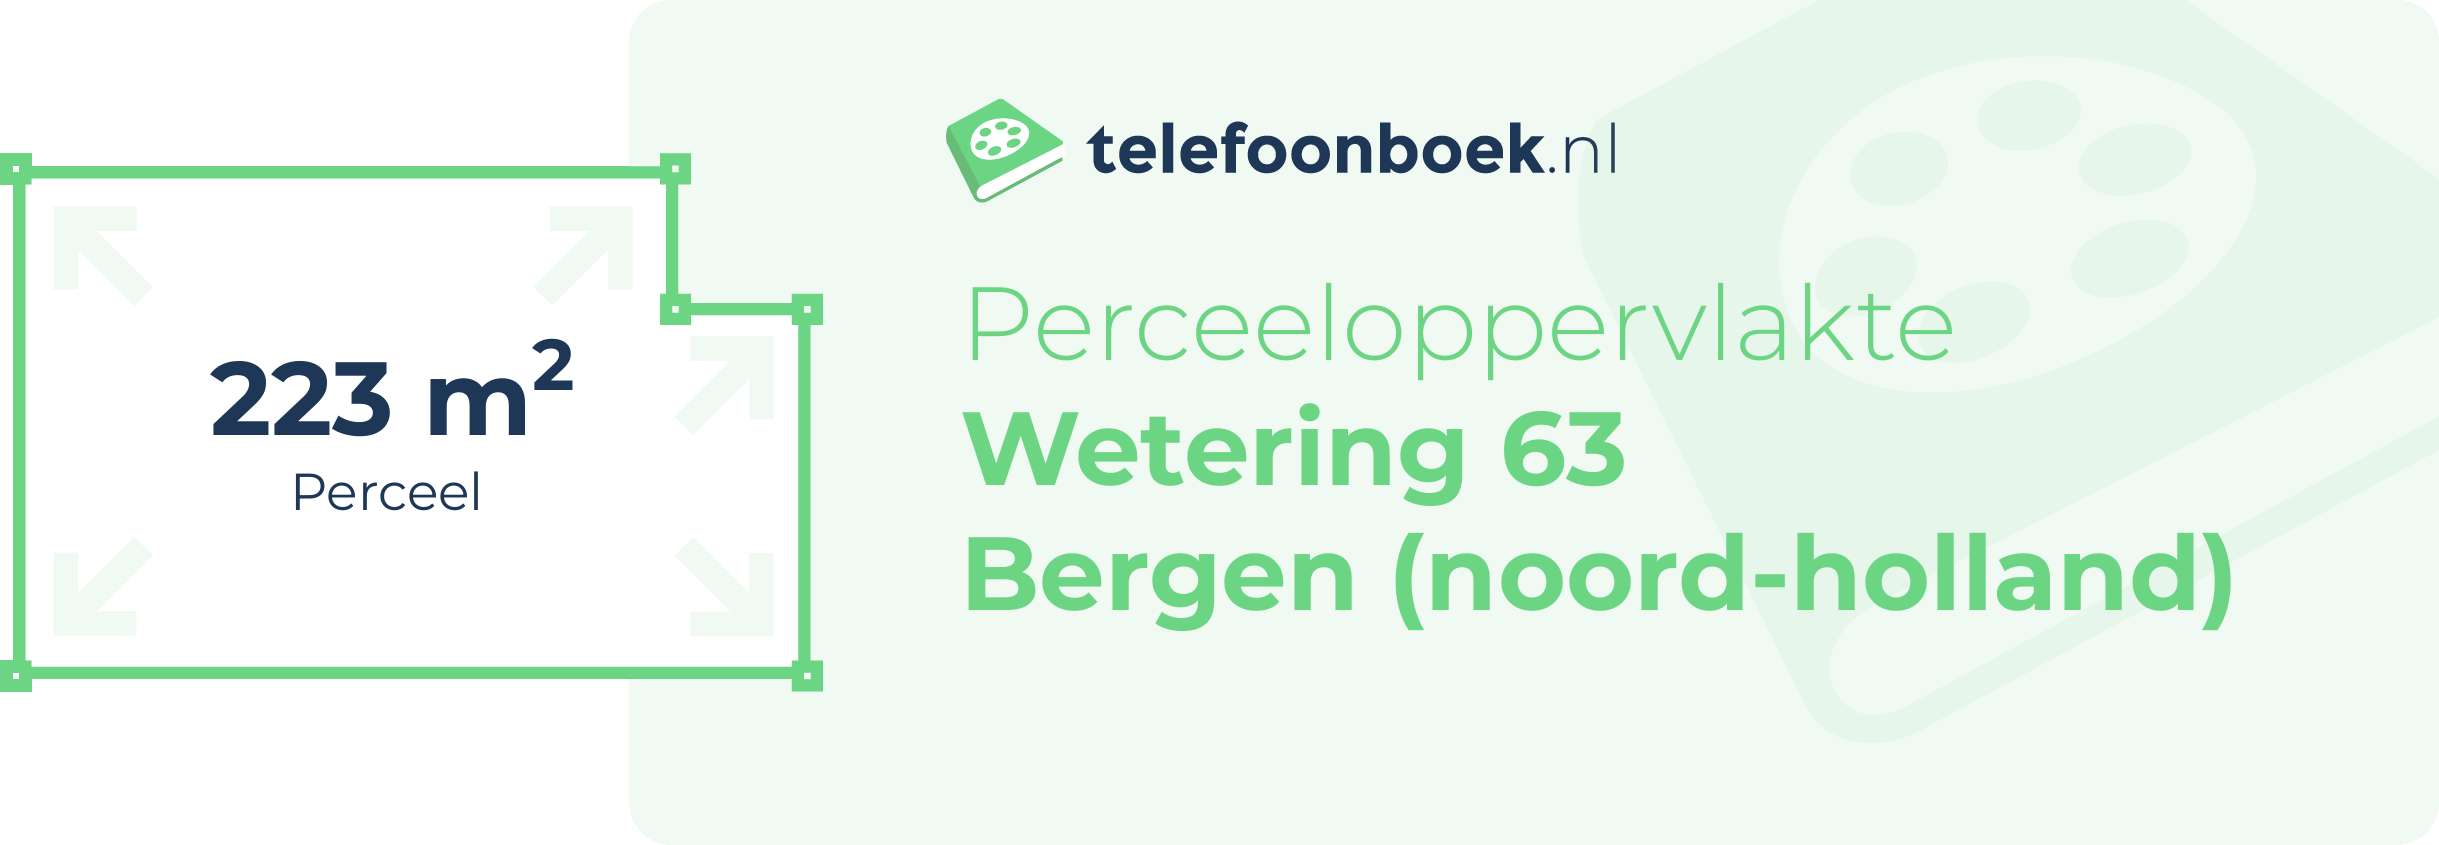 Perceeloppervlakte Wetering 63 Bergen (Noord-Holland)